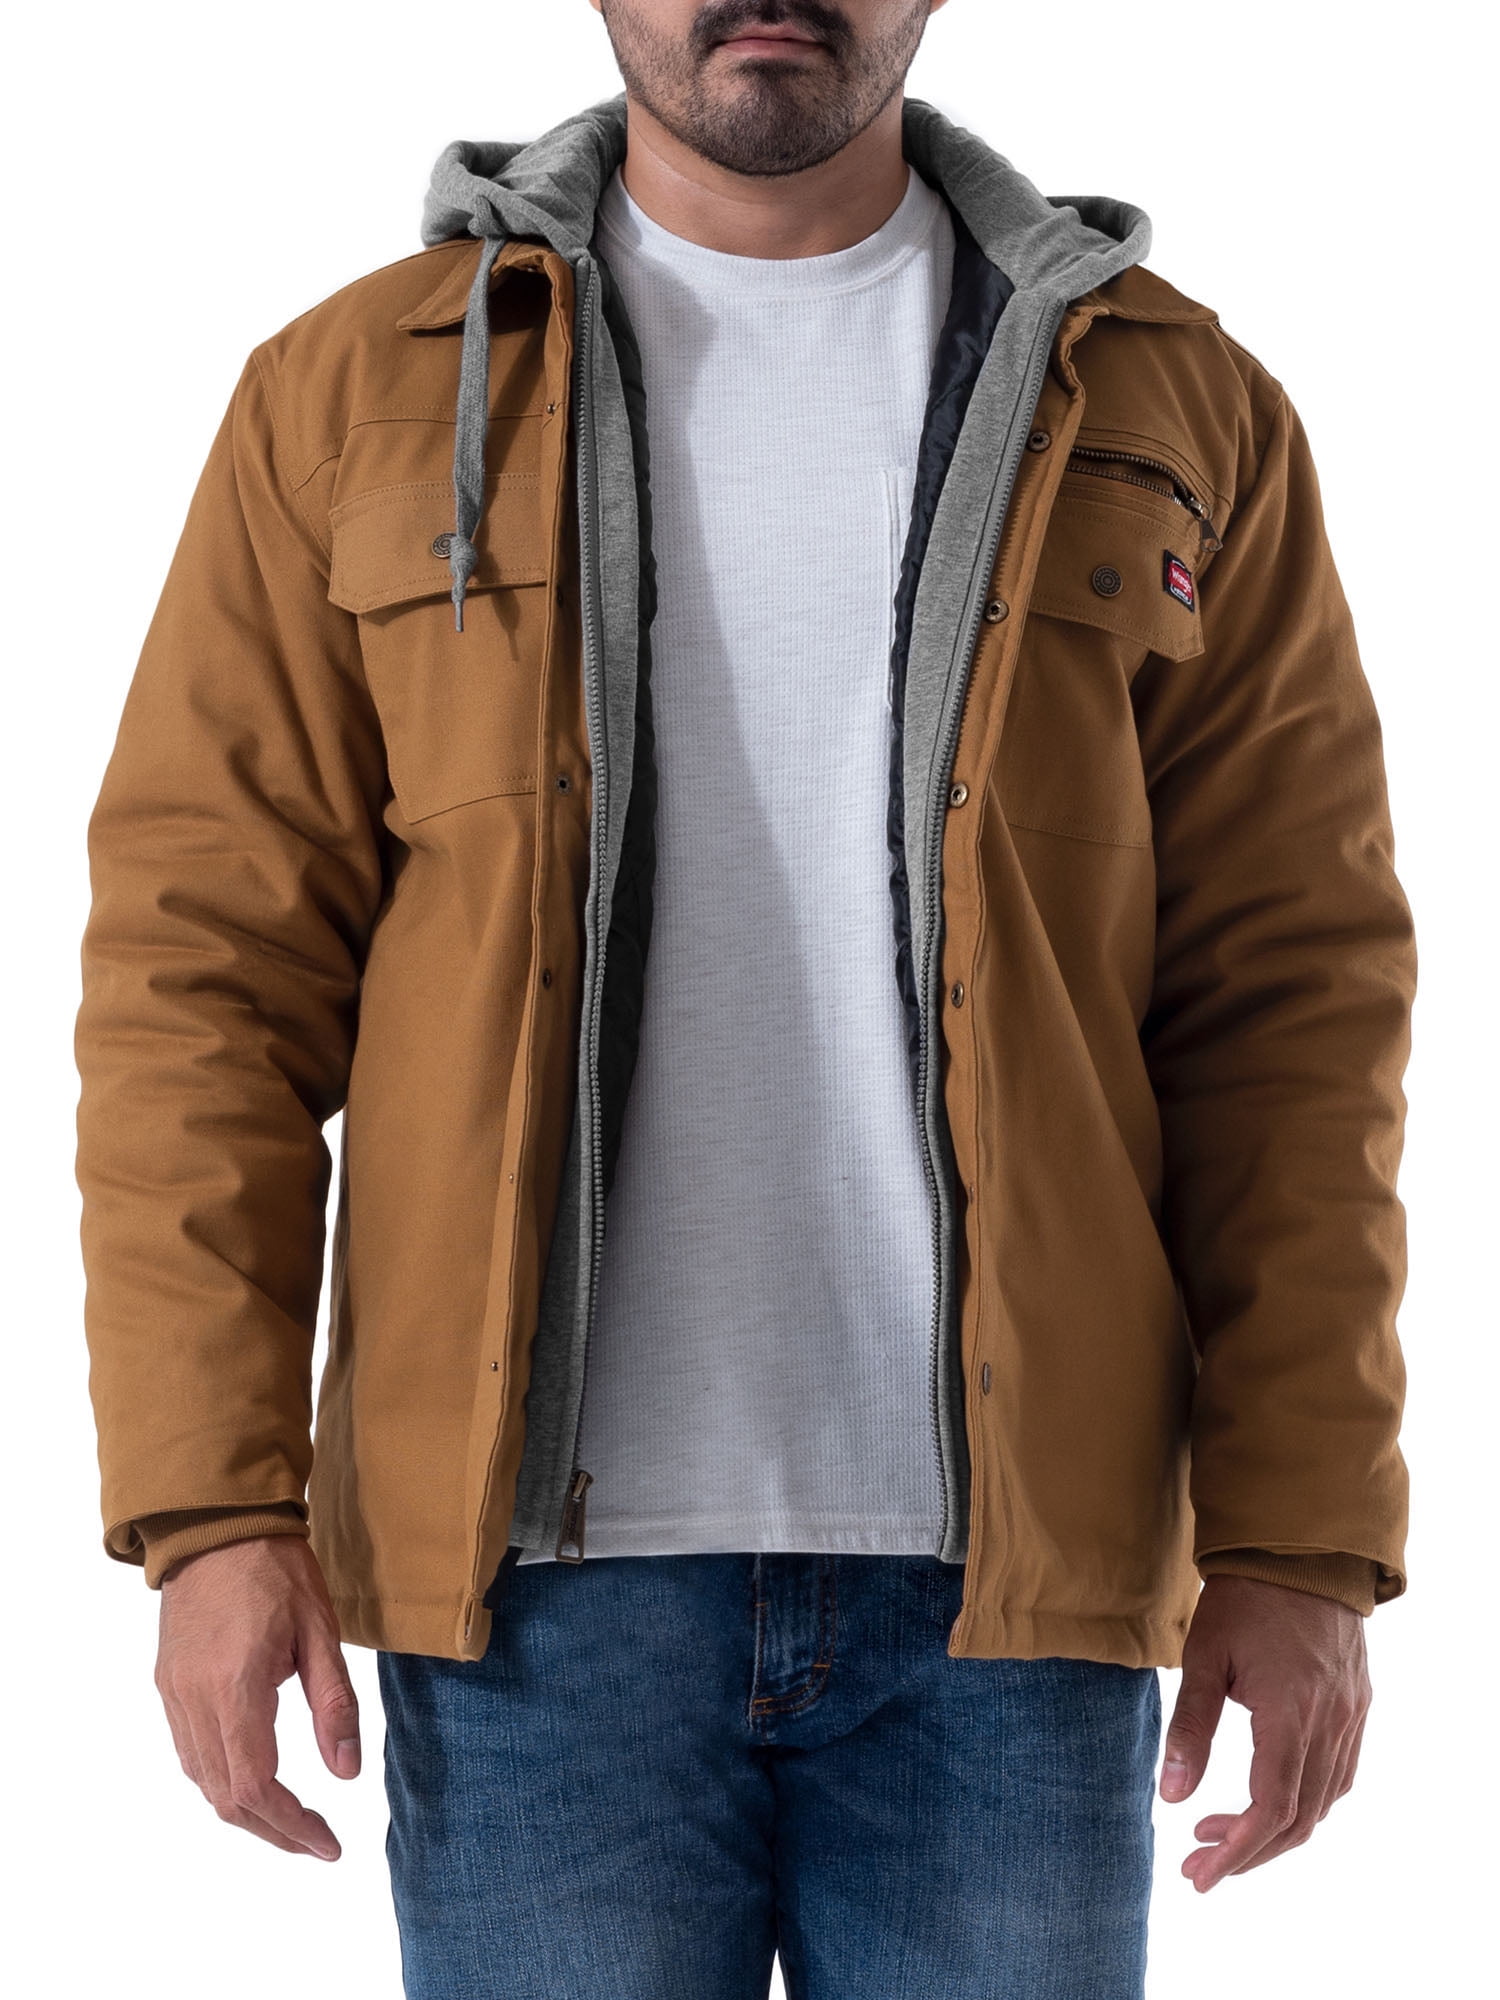 Wrangler Workwear Men's & Big Men's Quilted Lined Shirt Jacket, S-5XL -  